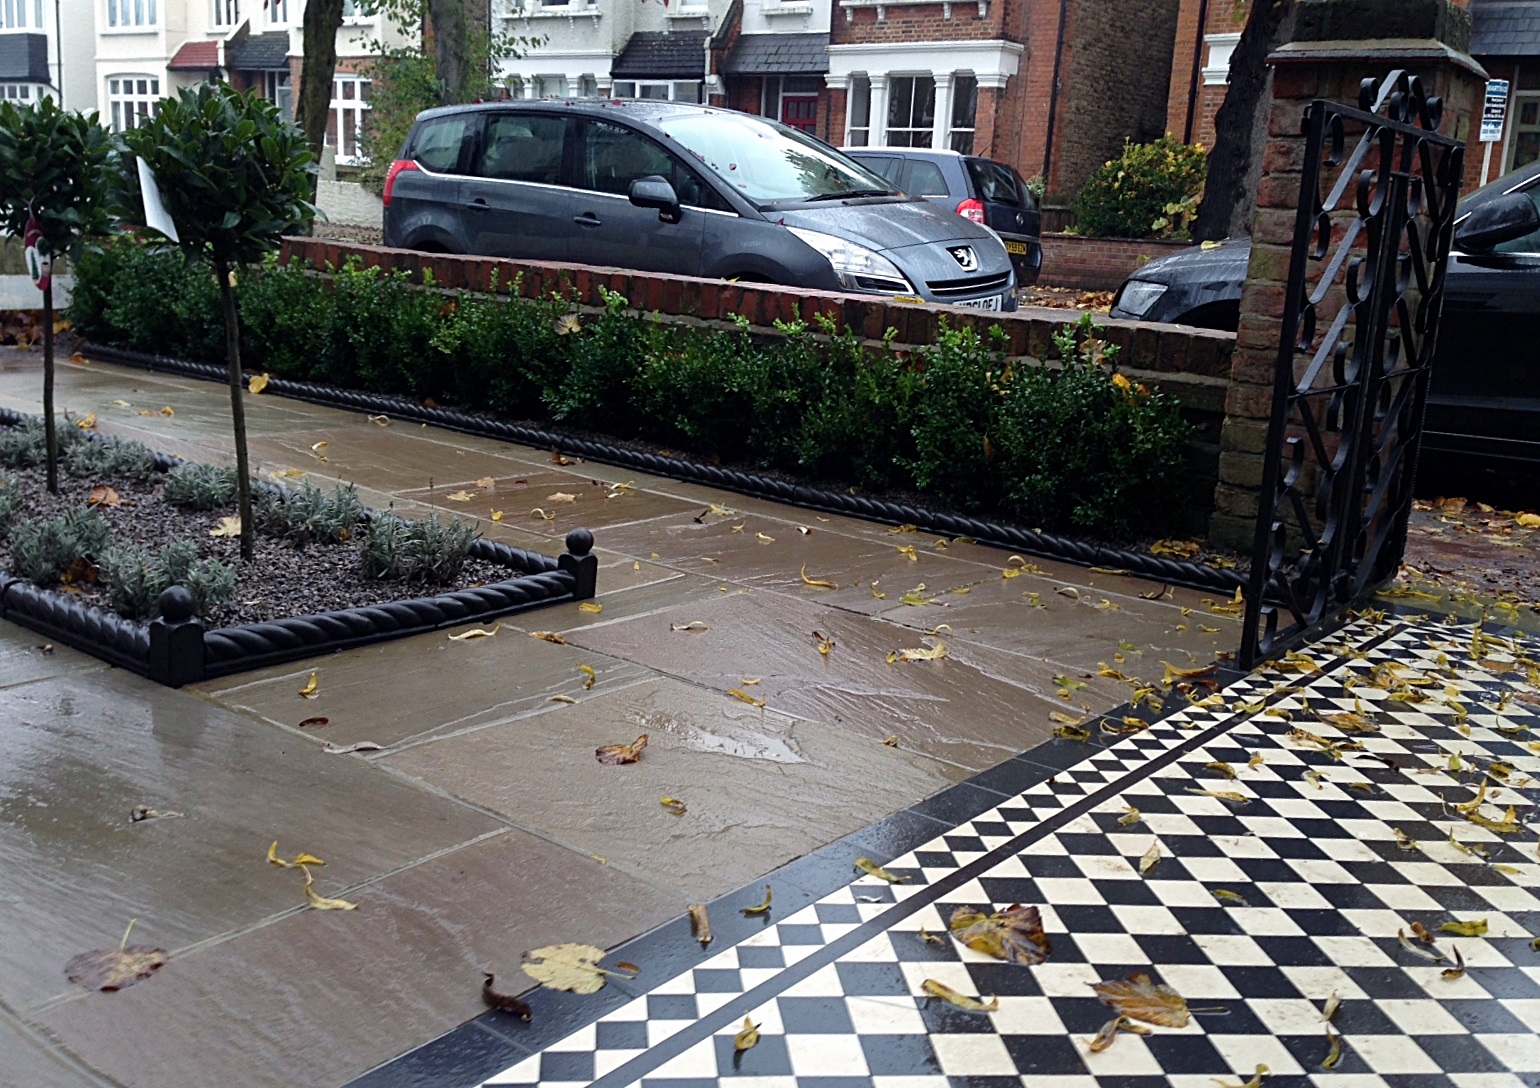 victroian black and white mosaic tile garden path paving formal planting buxus bay lavender edge tiles london (1)